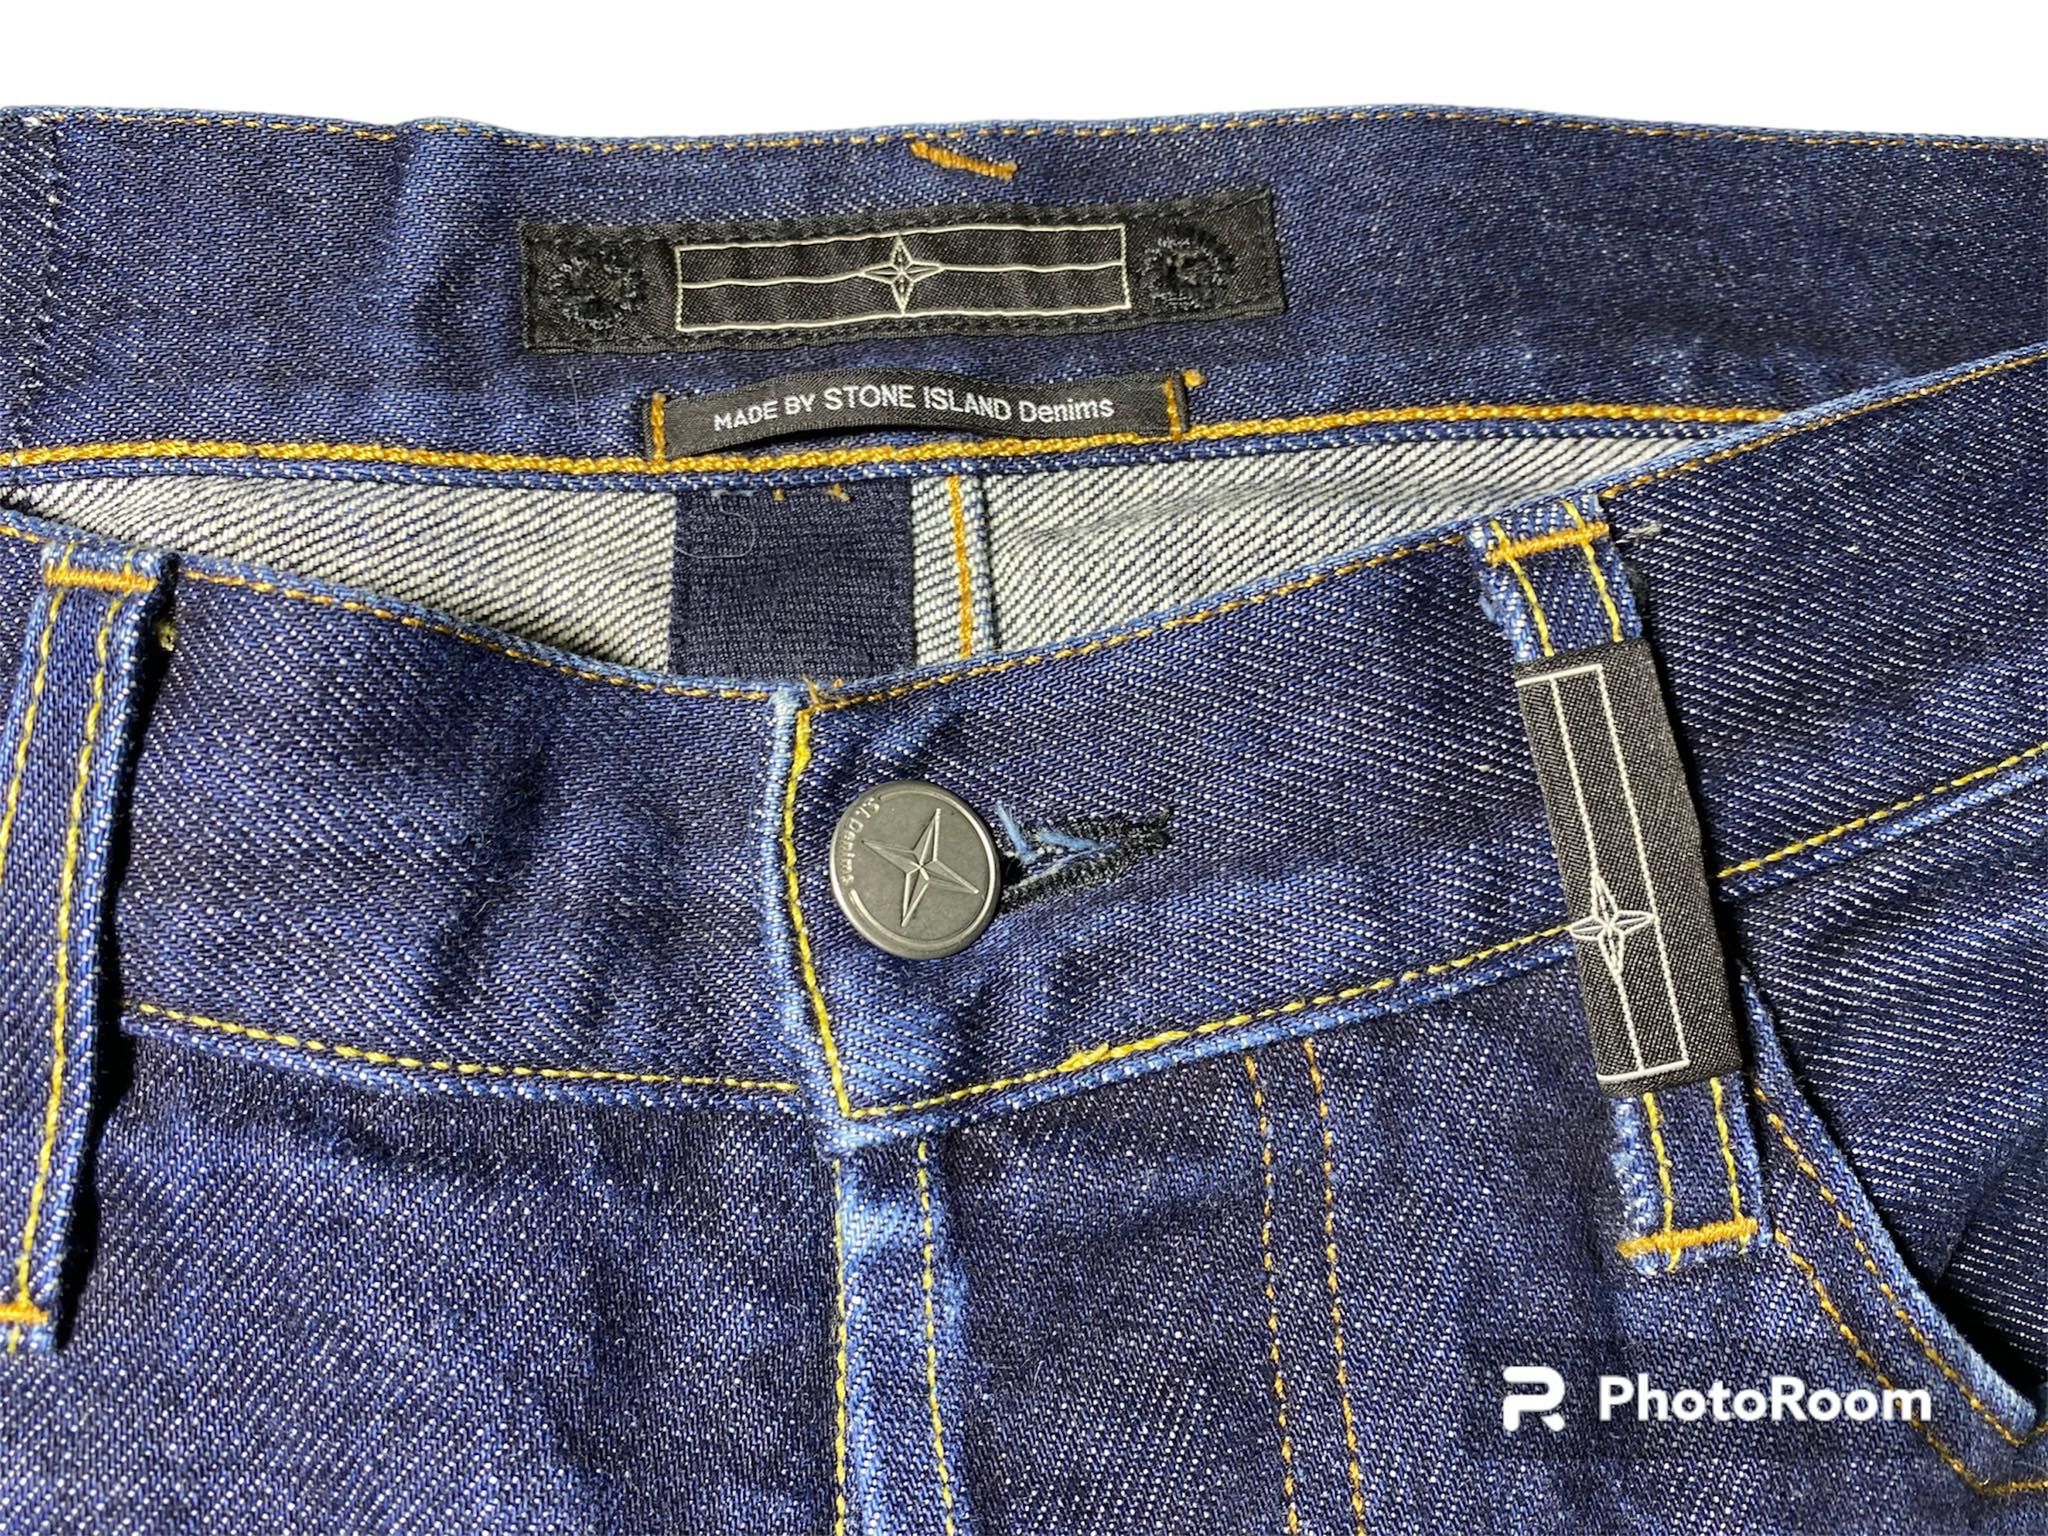 Stone Island Stone Island Denims Jeans Vintage Back Pocket Logo Size US 31 - 6 Thumbnail